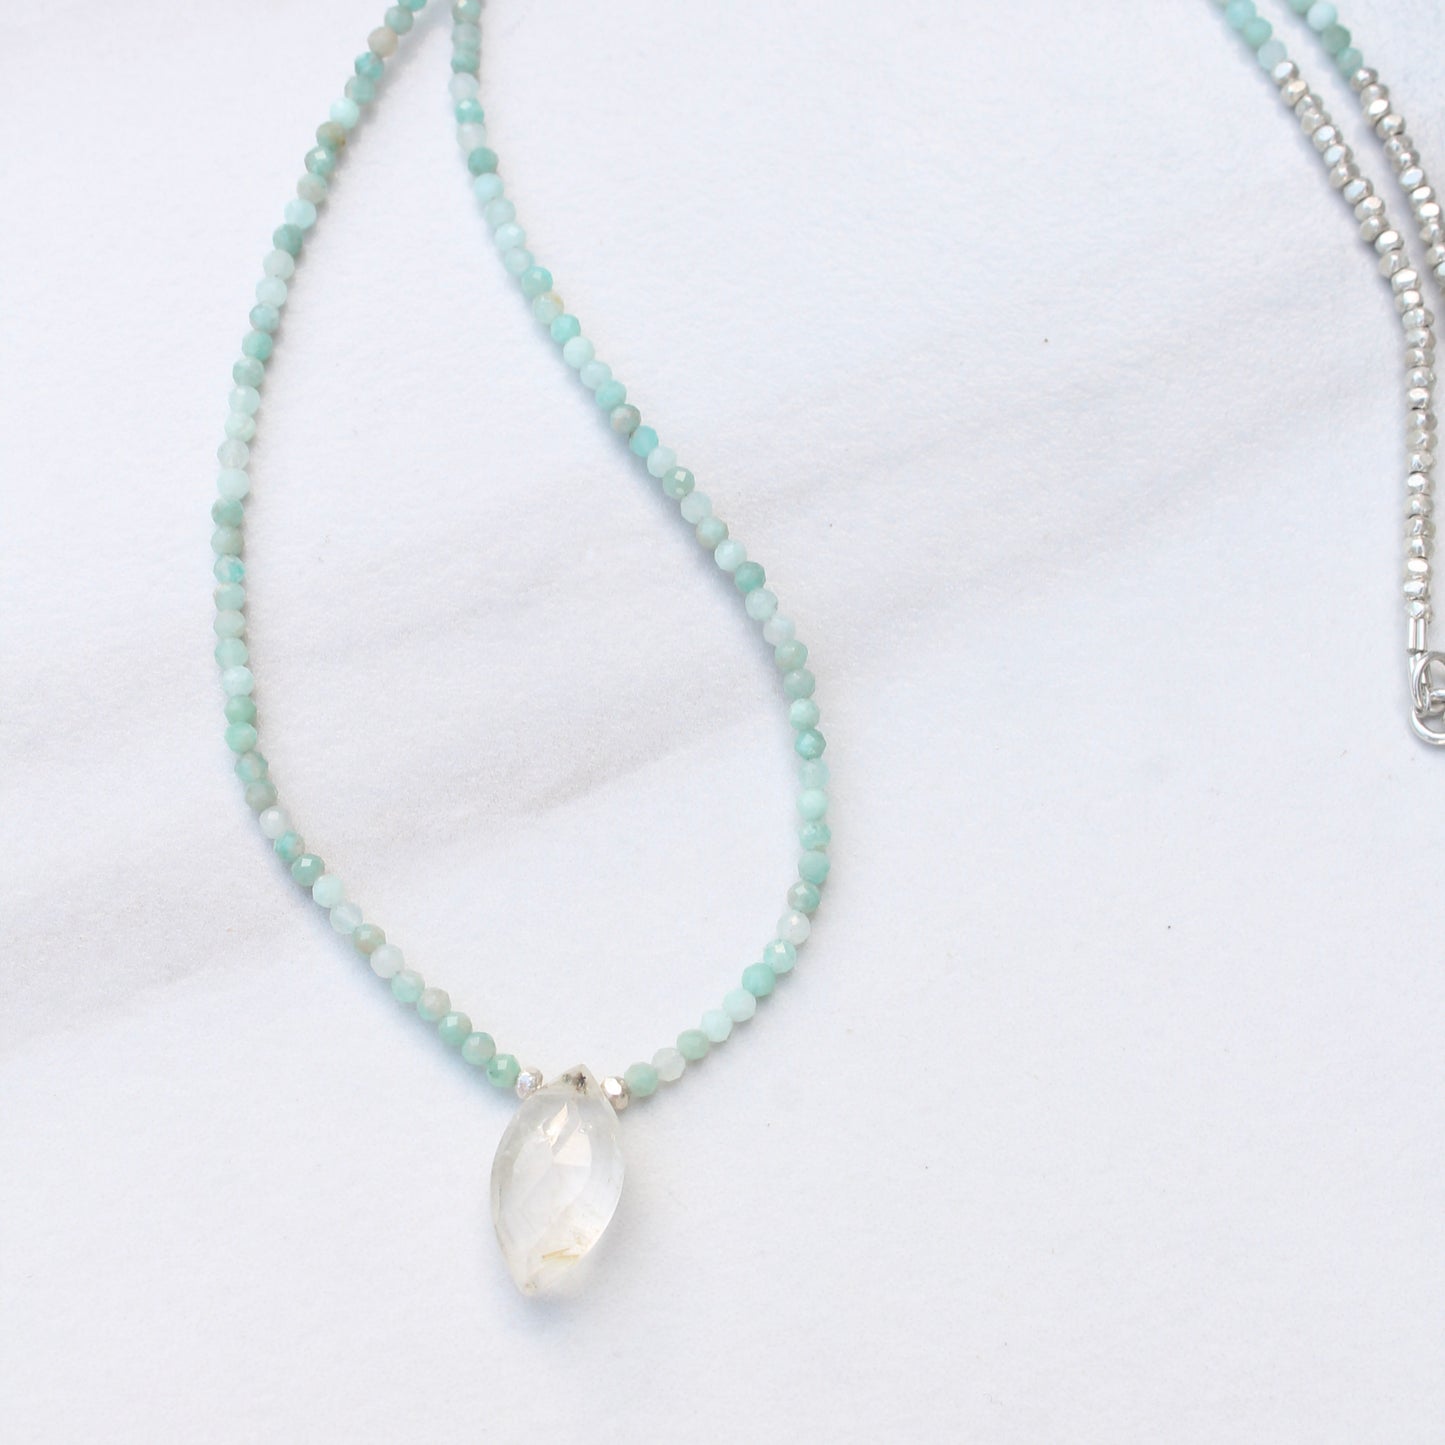 Marquise Rutile Quartz and Amazonite Gemstone Necklace